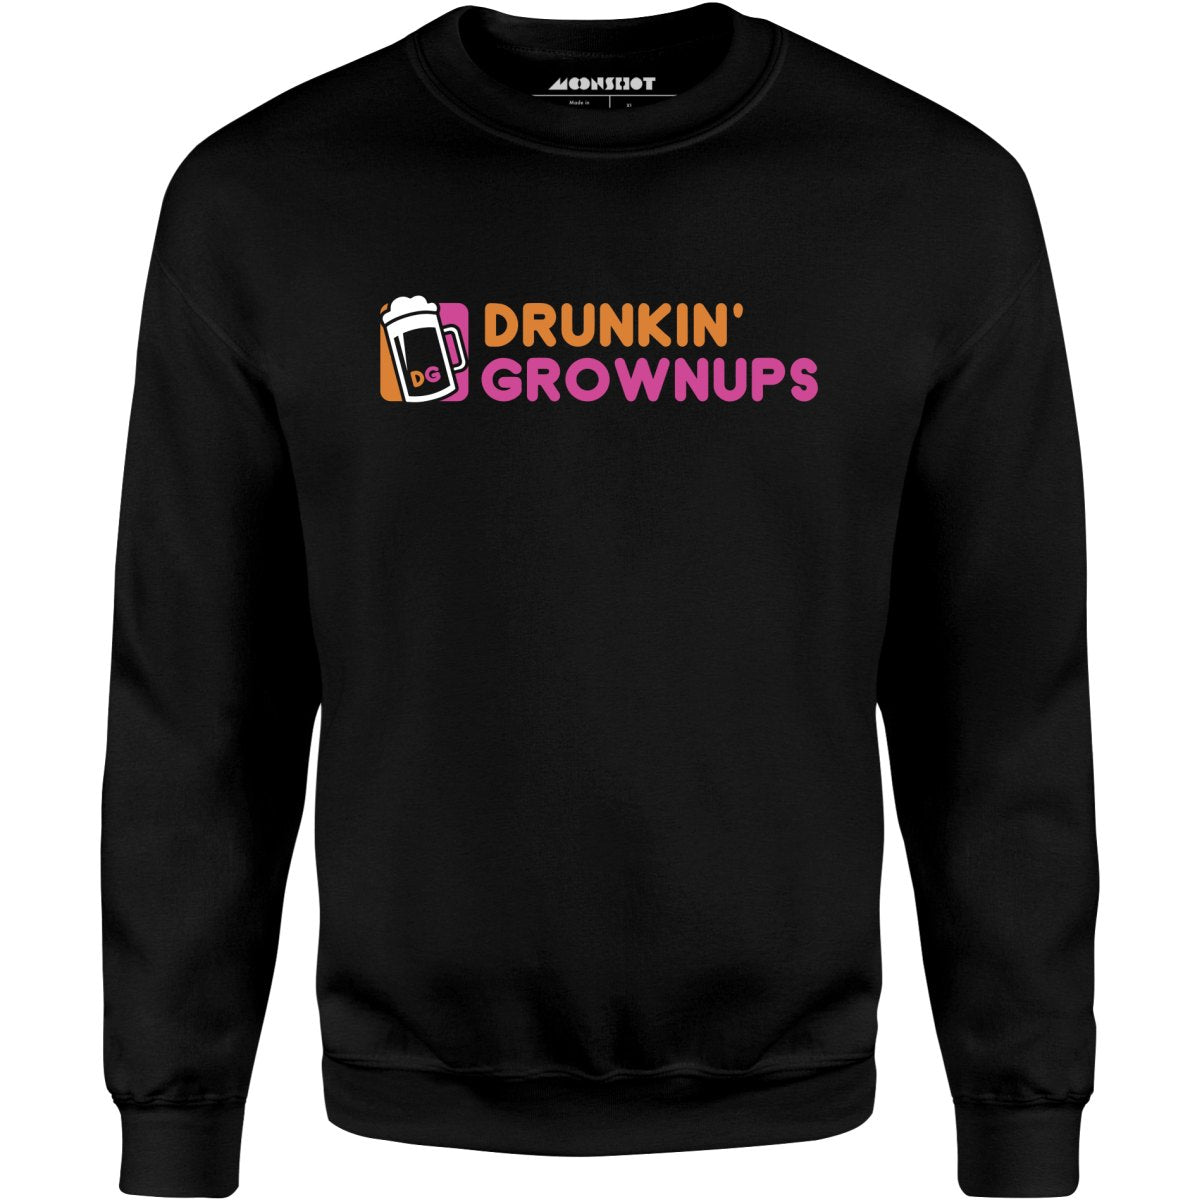 Drunkin' Grownups - Unisex Sweatshirt